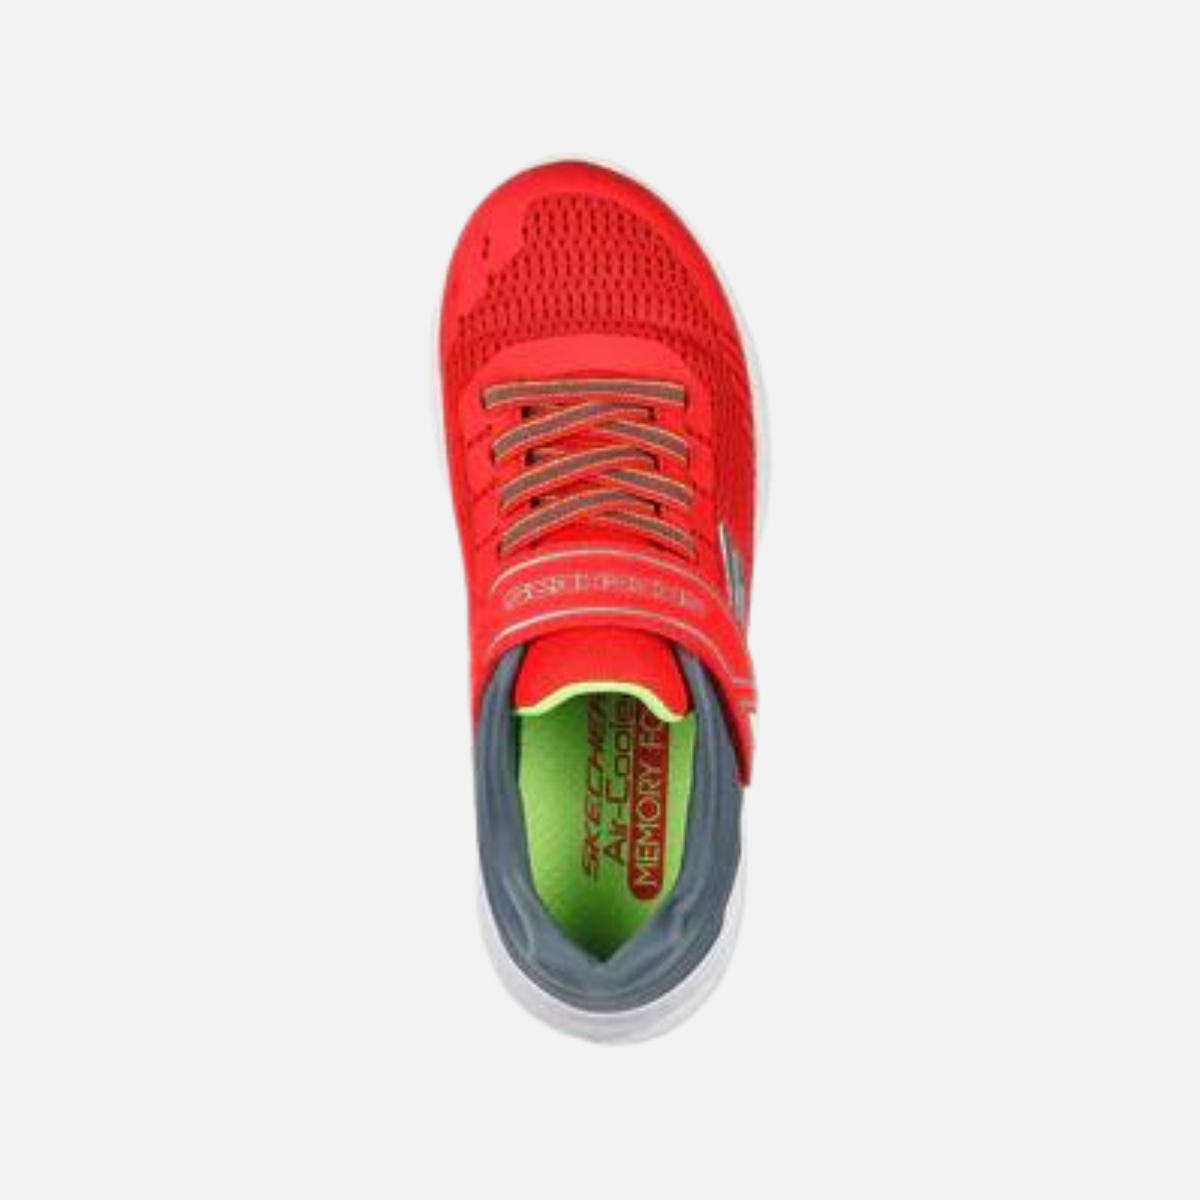 Skechers Razor Flex Kid's Shoes (4-9 Year)- Charcoal/red